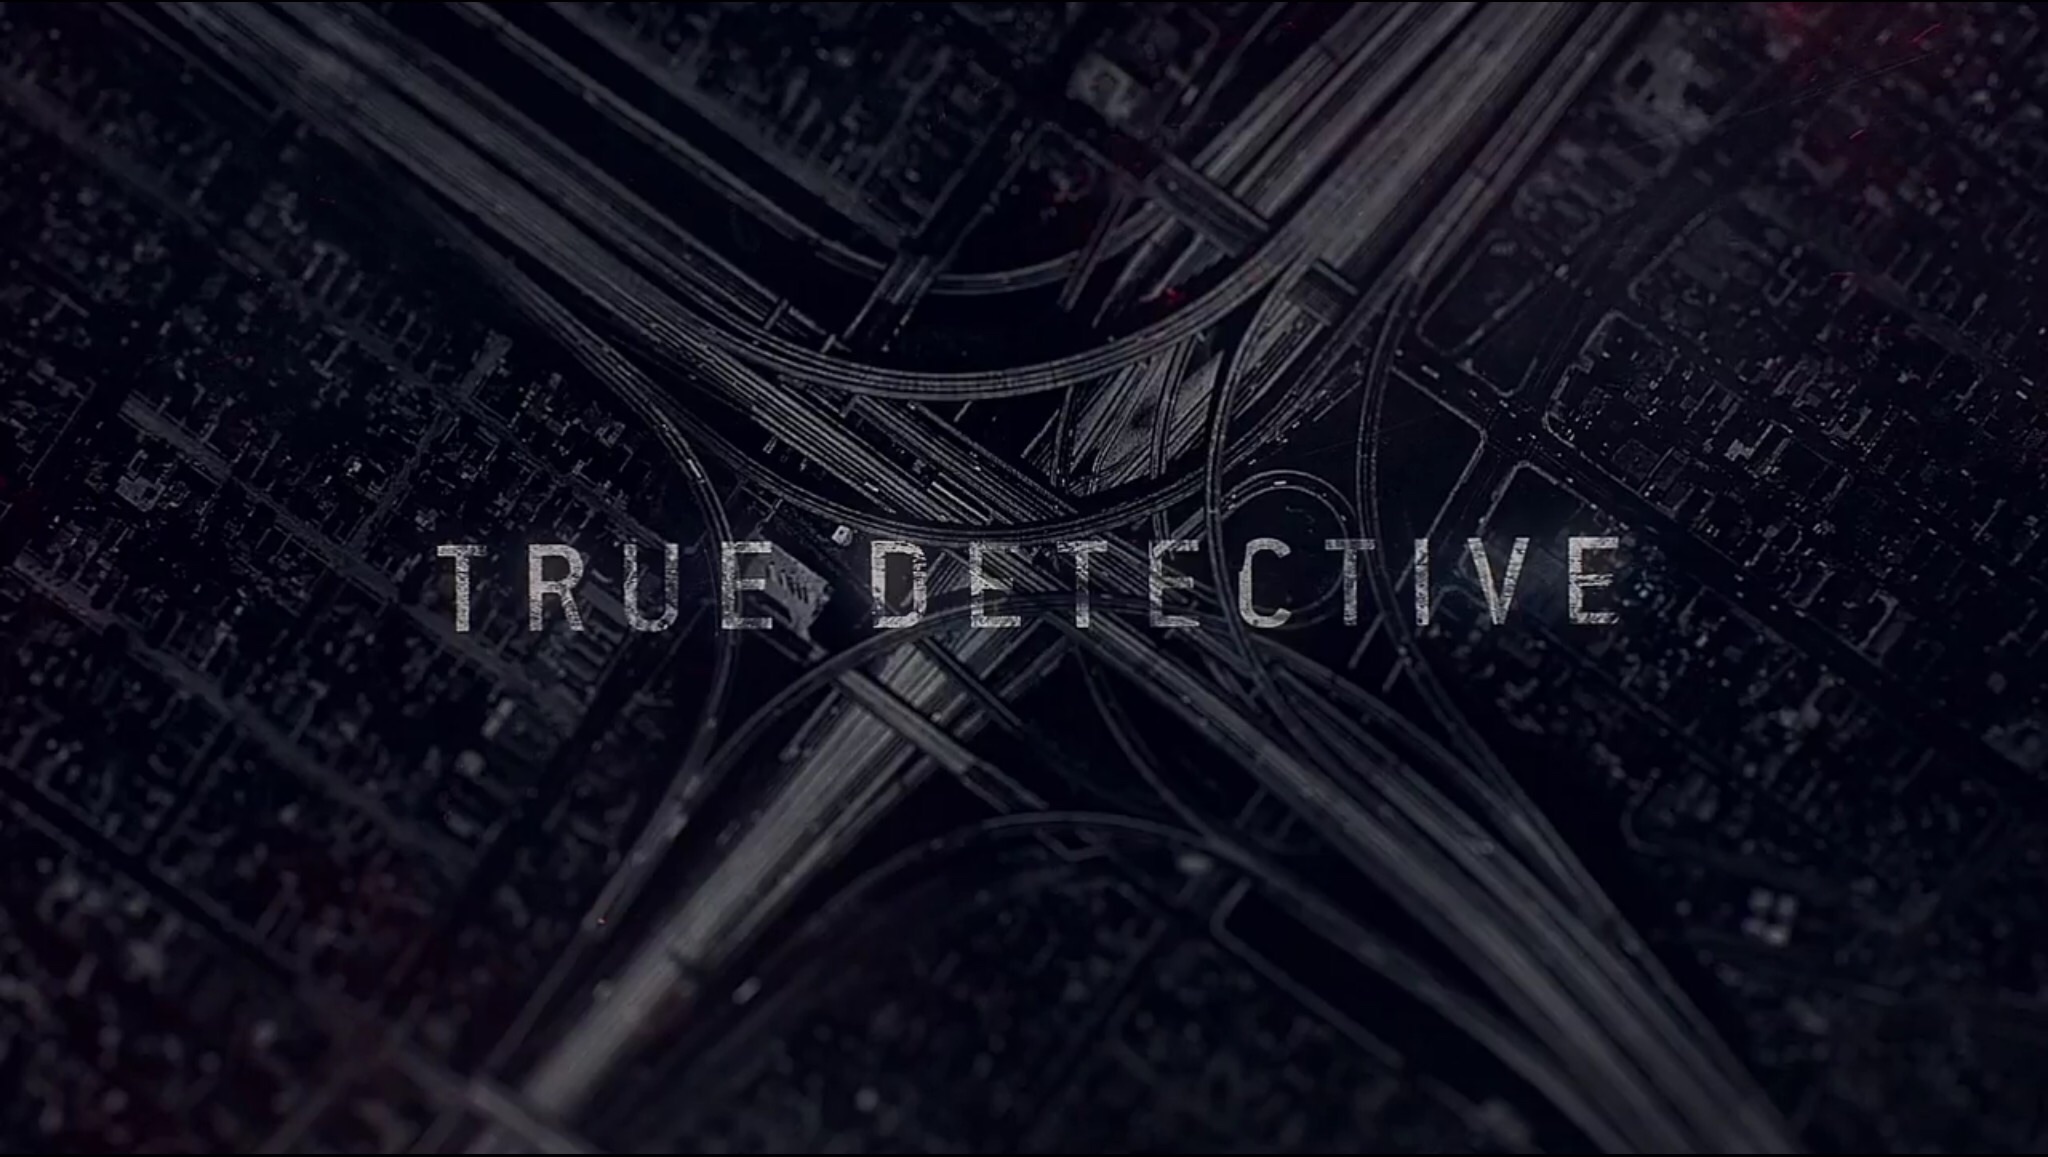 True Detective's season 2 title card